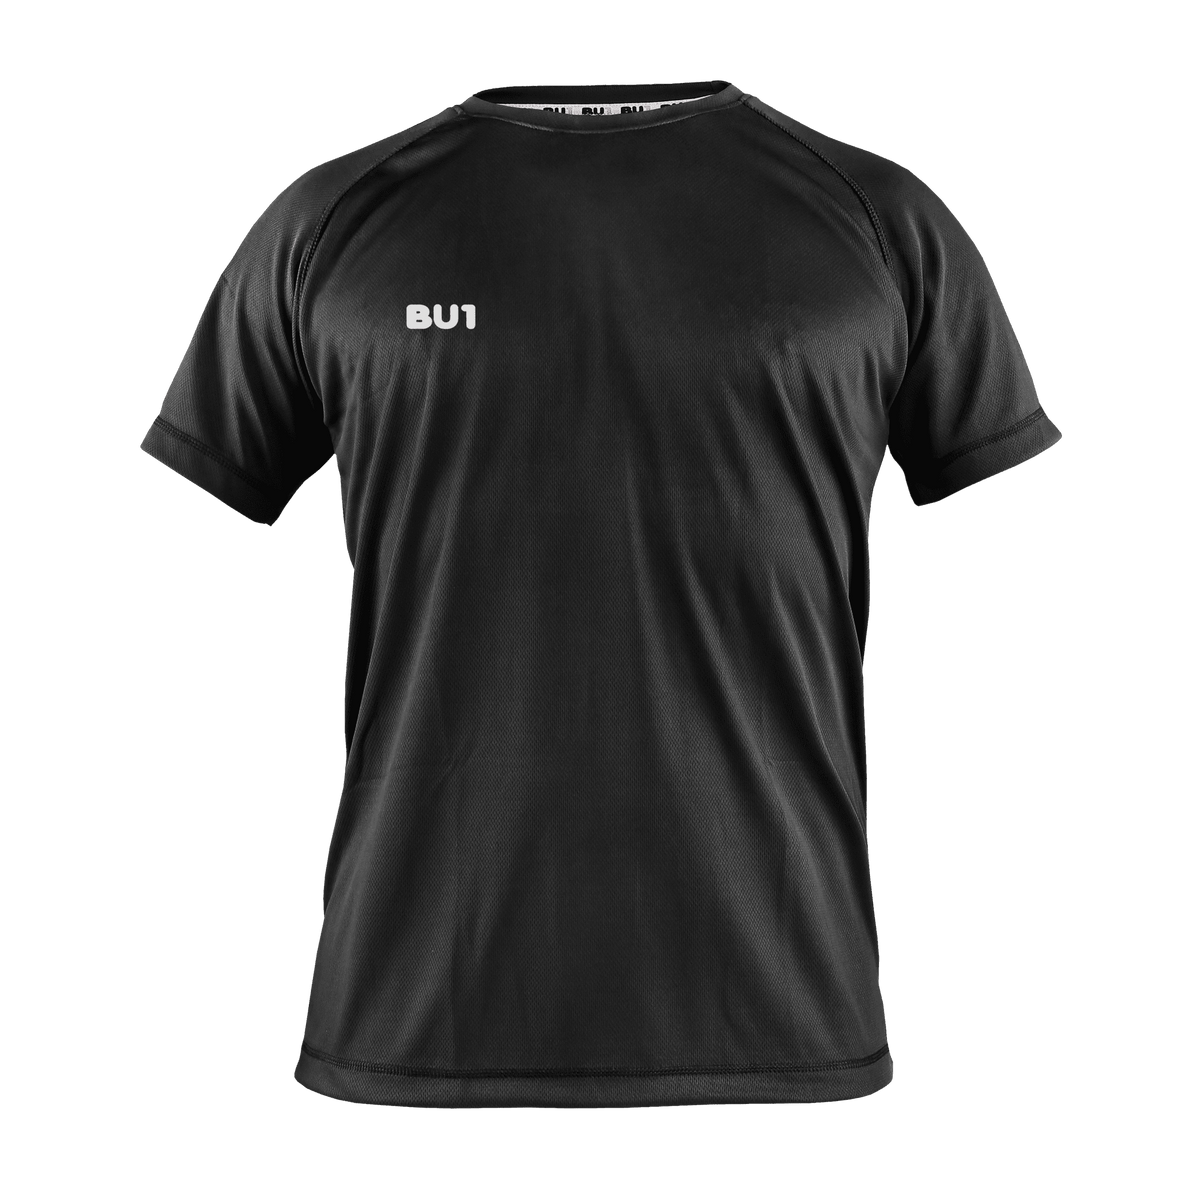 BU1 Trainingsshirt schwarz